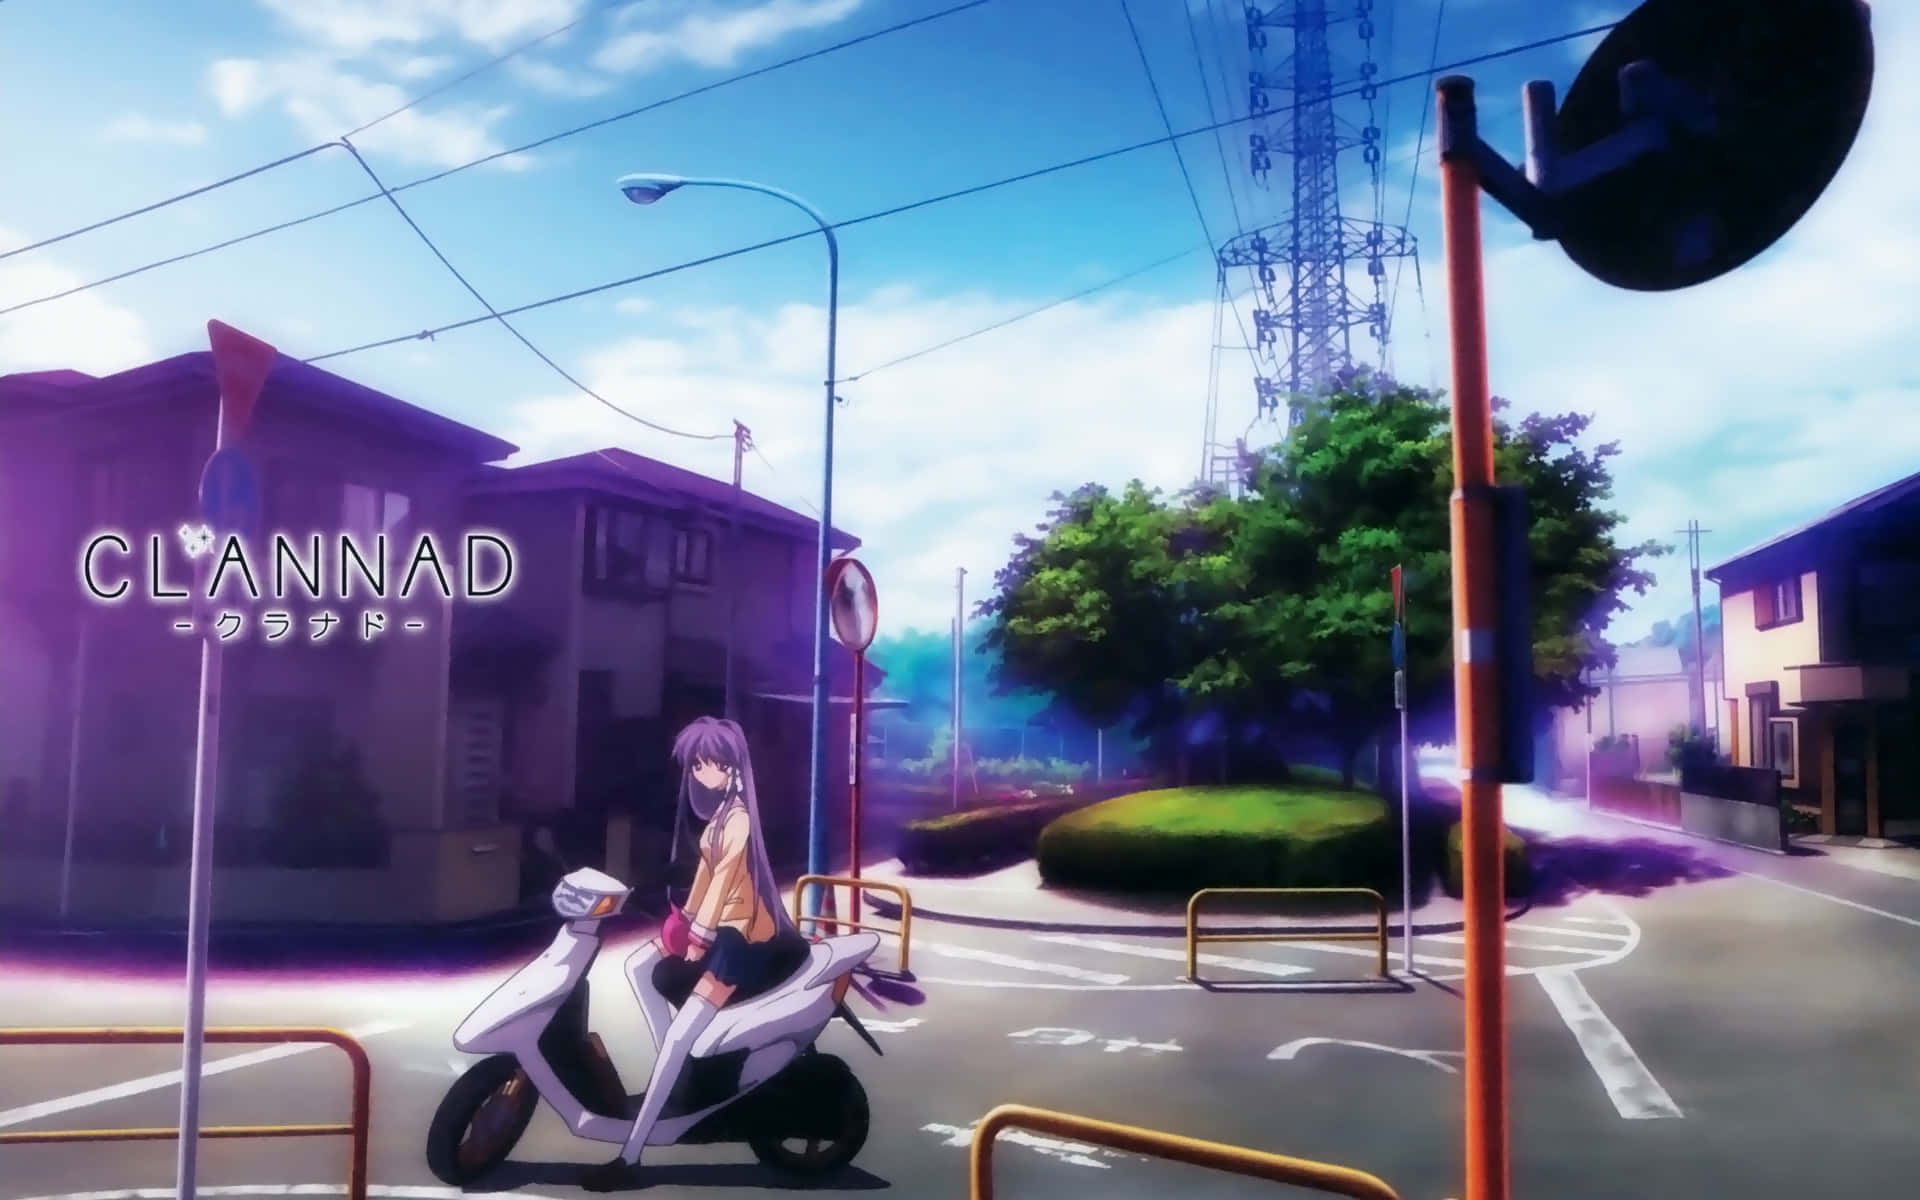 Captivating Image Of Kyou Fujibayashi From Clannad Anime Series Wallpaper